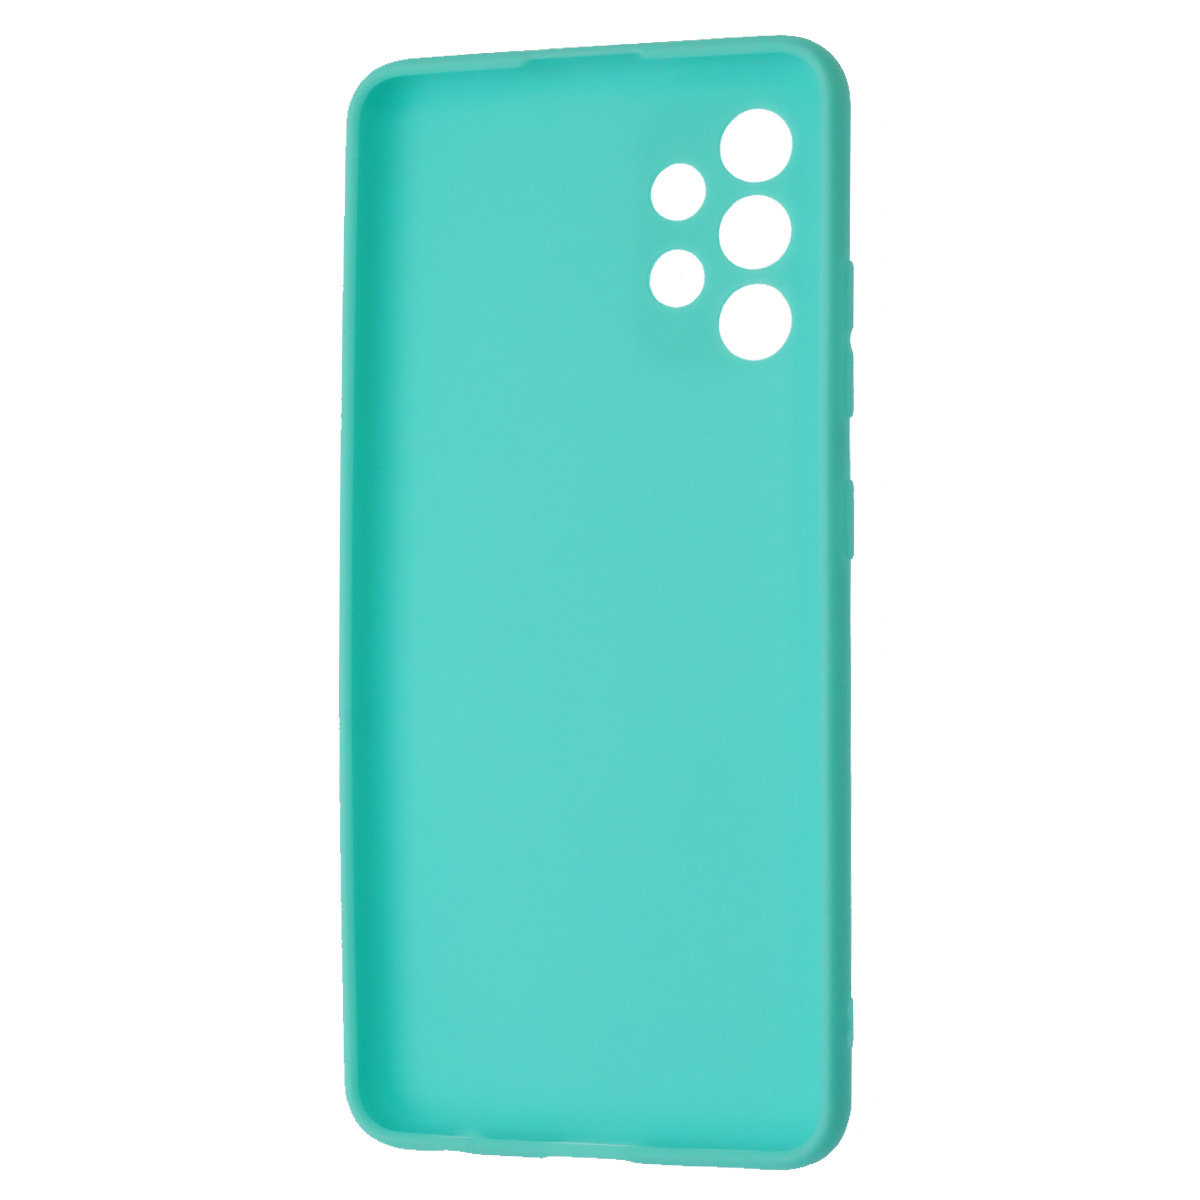 Чехол накладка Soft Touch для SAMSUNG Galaxy A32 (SM-A325F), силикон, цвет бирюзовый